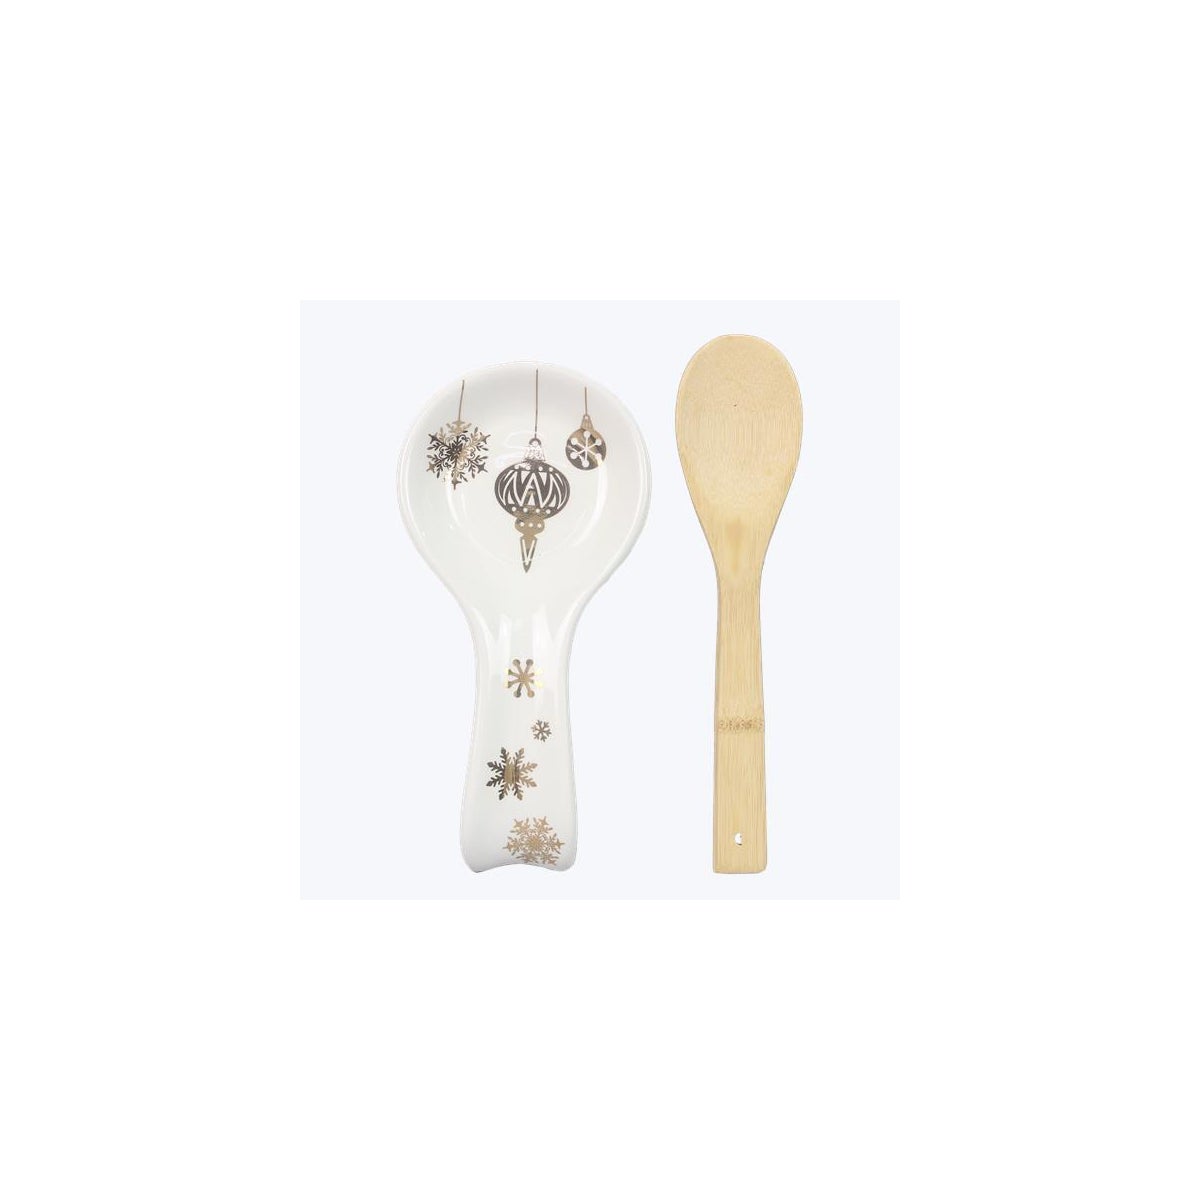 Ceramic Glitz Spoon Rest with Wooden Spoon